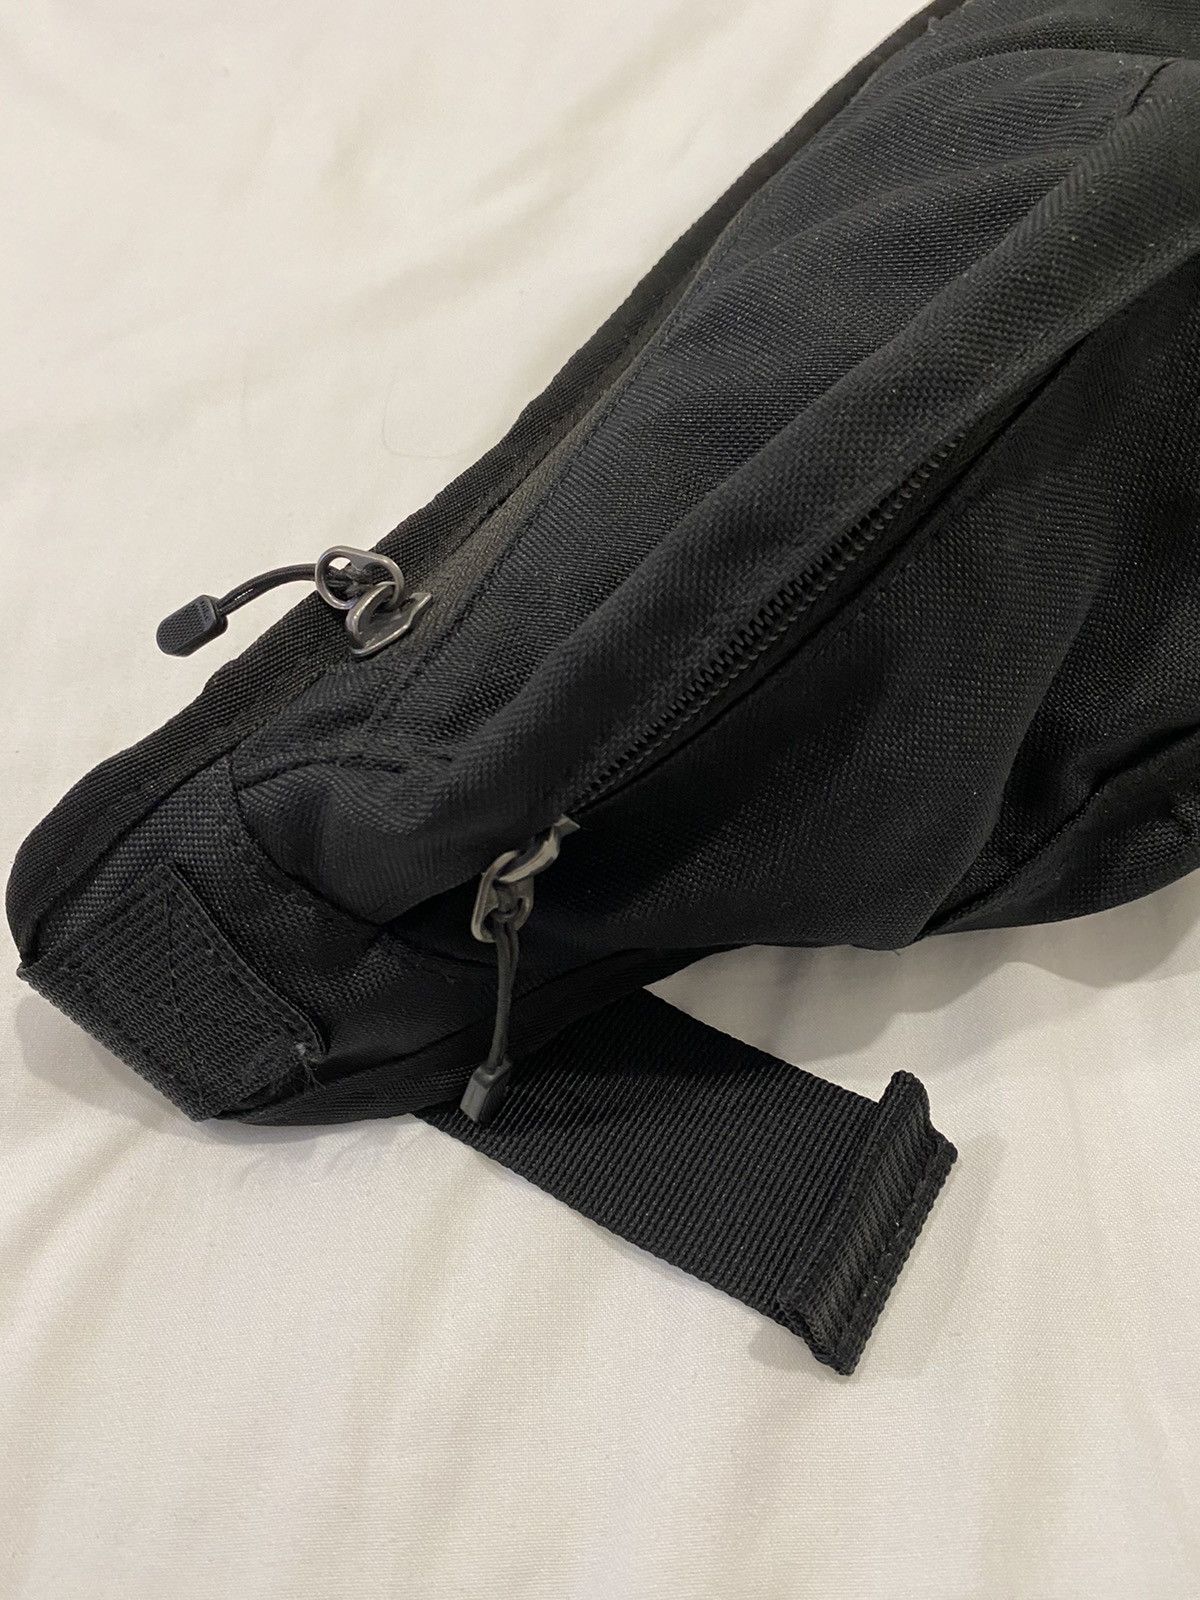 Authentic Nike Waist Pouch Bag - 8